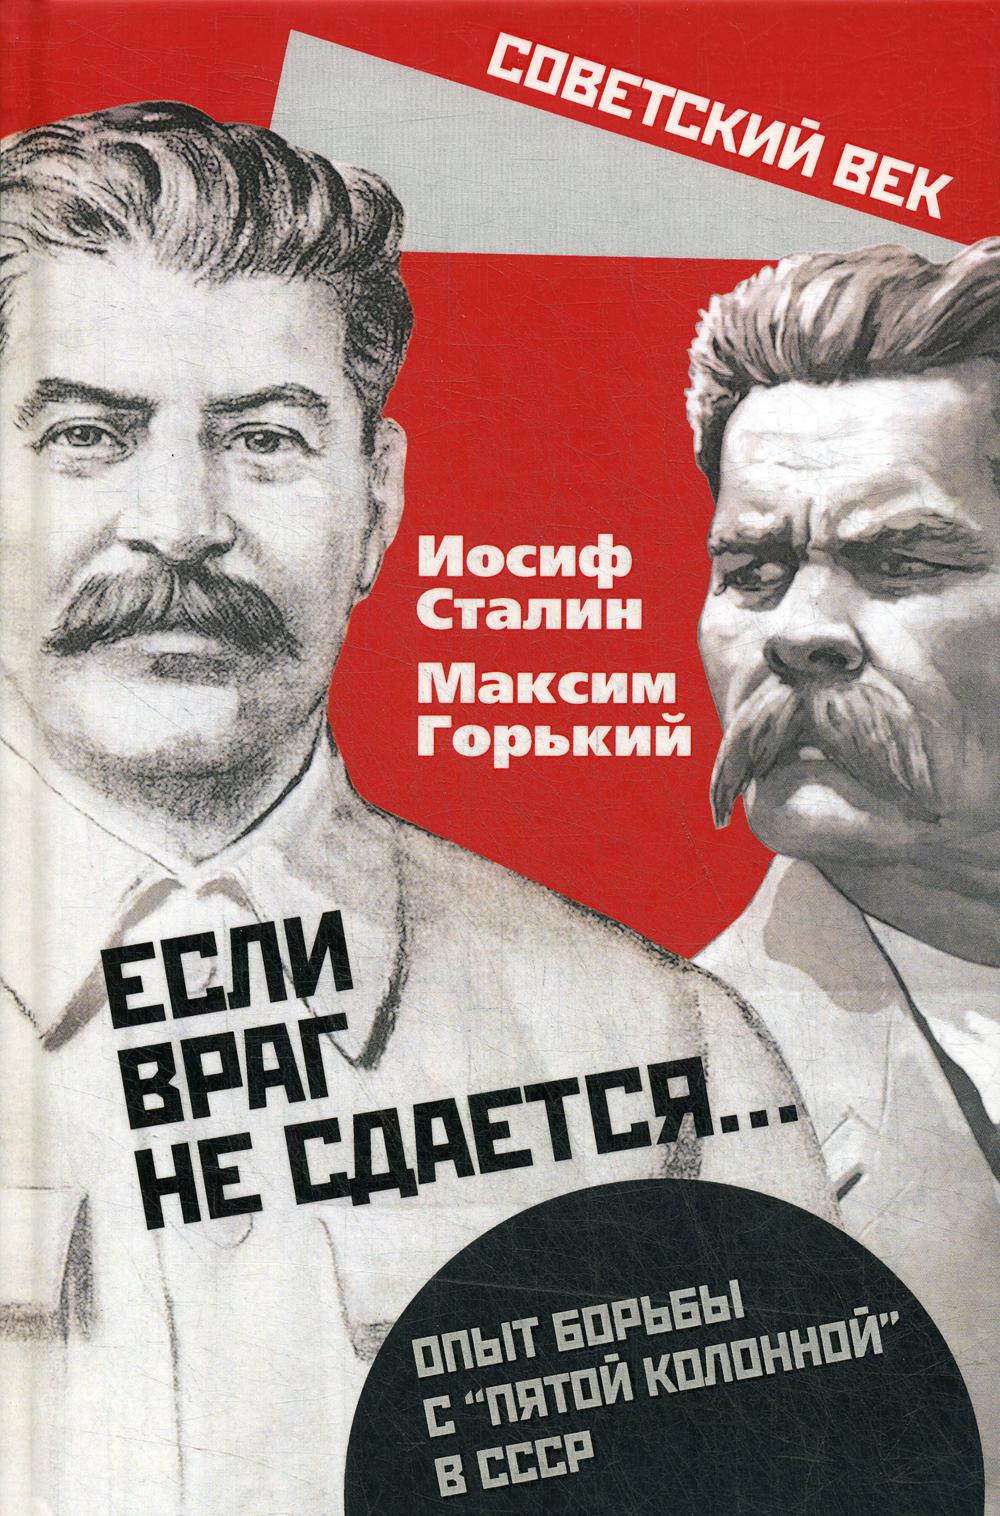 Сталин разрушил. Горький и Сталин. М Горький и Сталин. Противники Сталина.